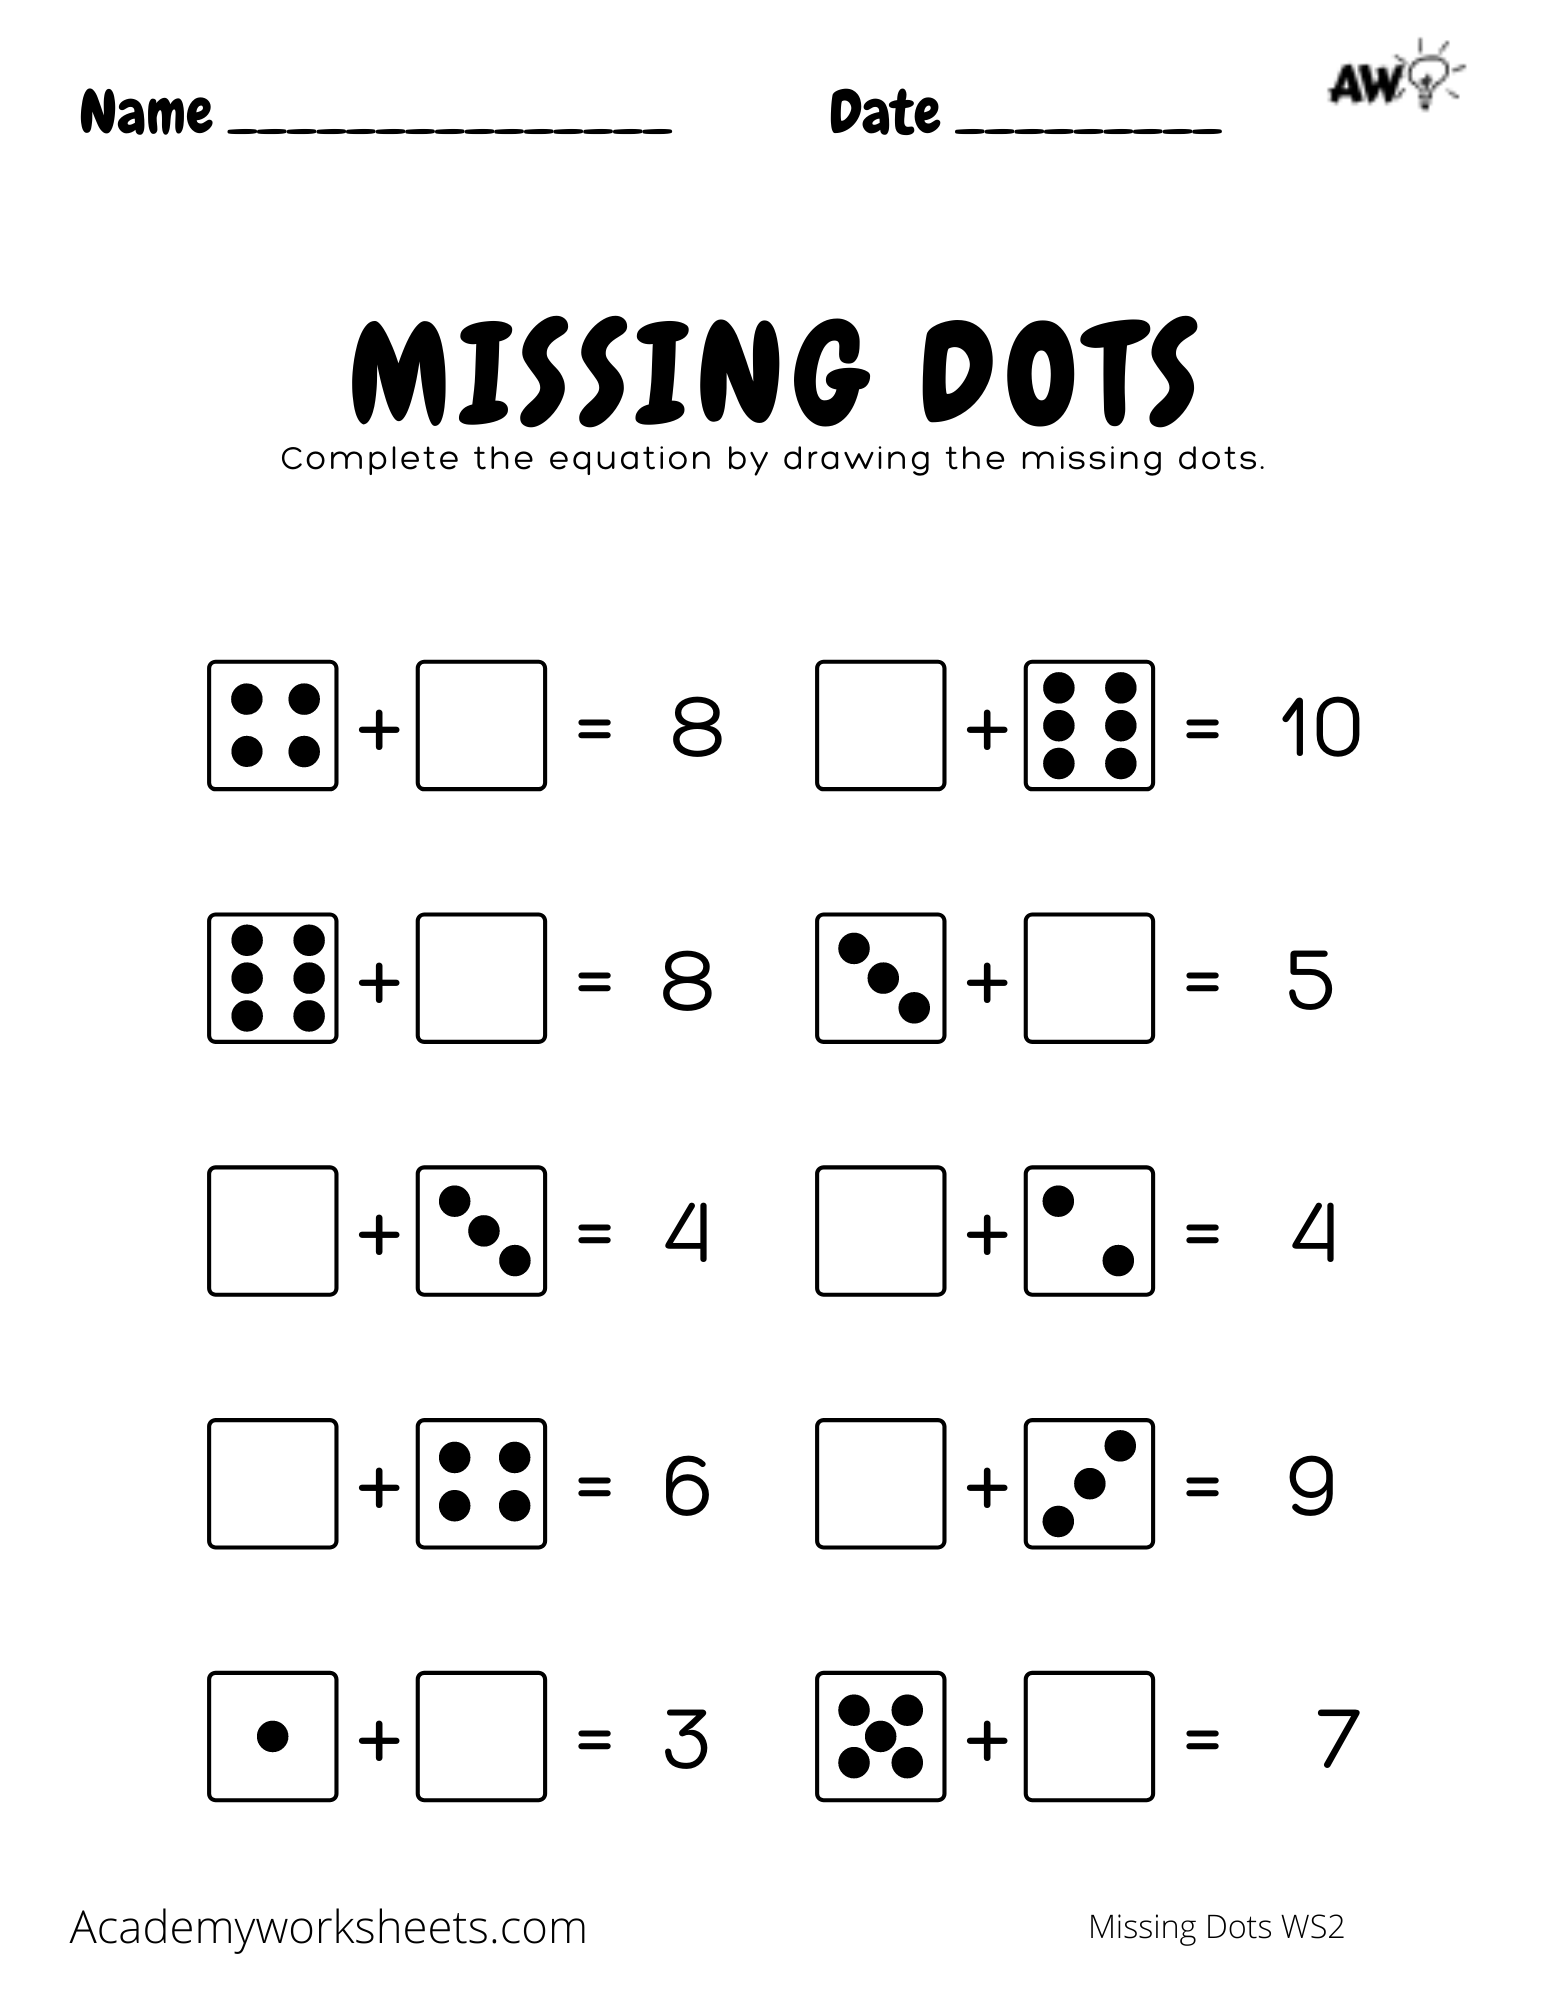 missing-dots-addition-worksheets-academy-worksheets